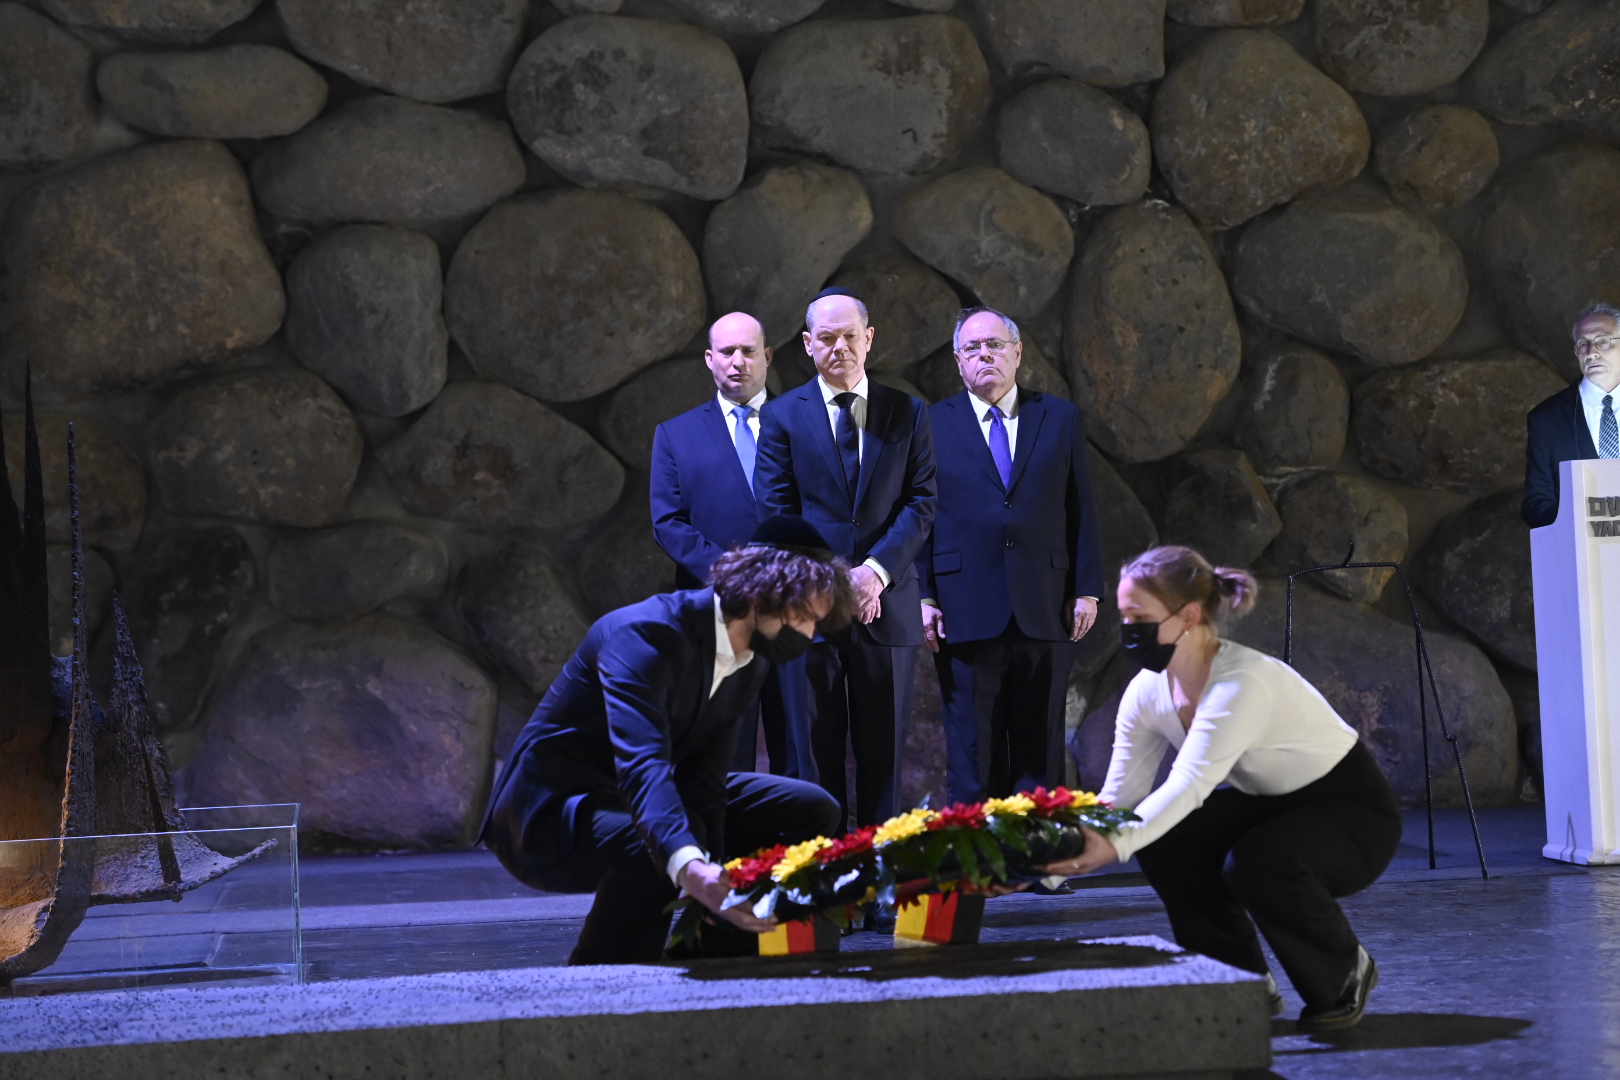 Young German volunteers in Israel lay the memorial wreath on behalf of Chancellor Scholz